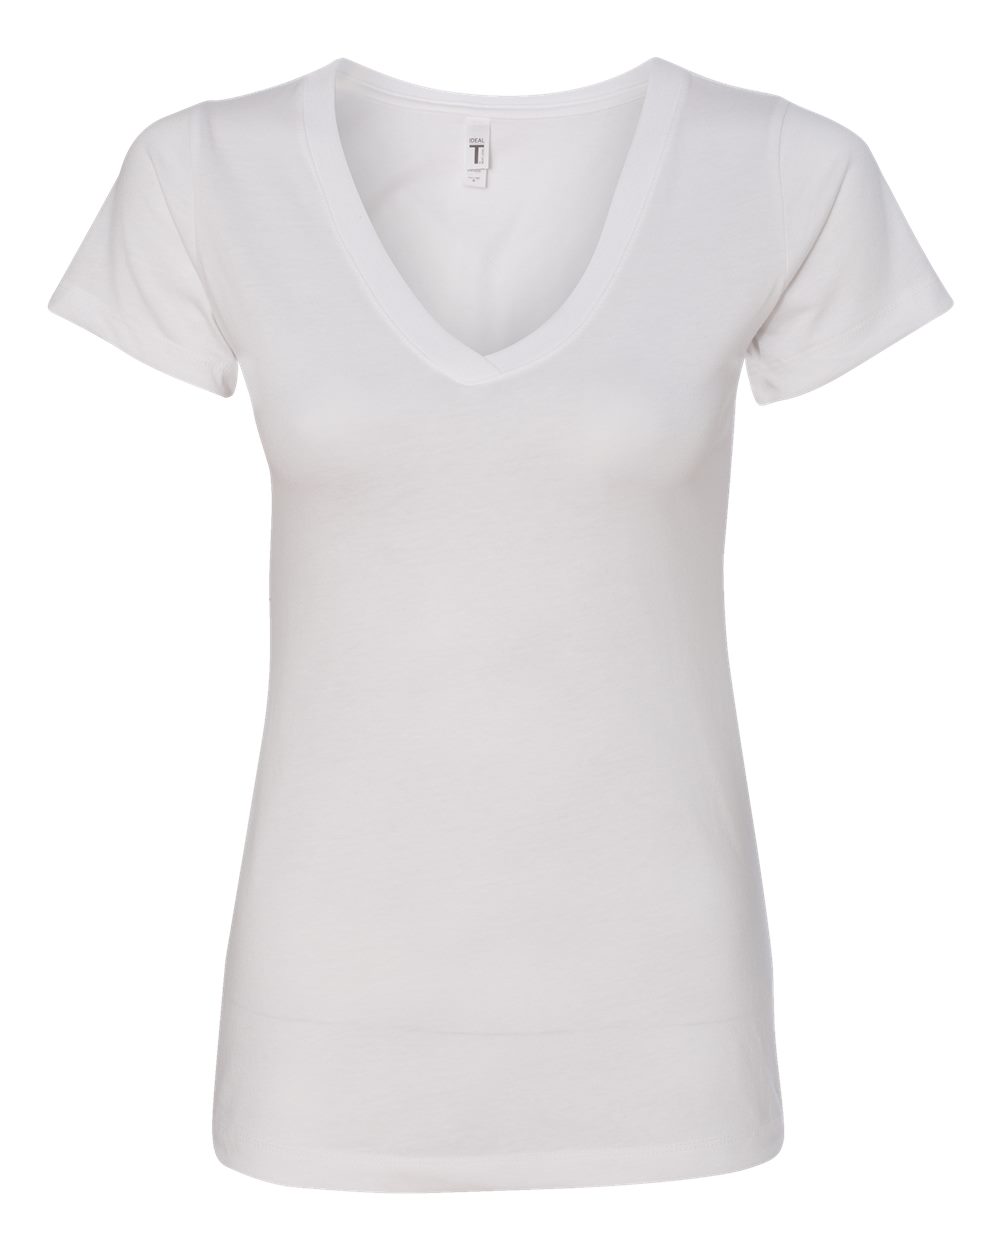 Next Level-WOMEN 'S V Neck Tee Femme Idéal Col V T-Shirt 1540 